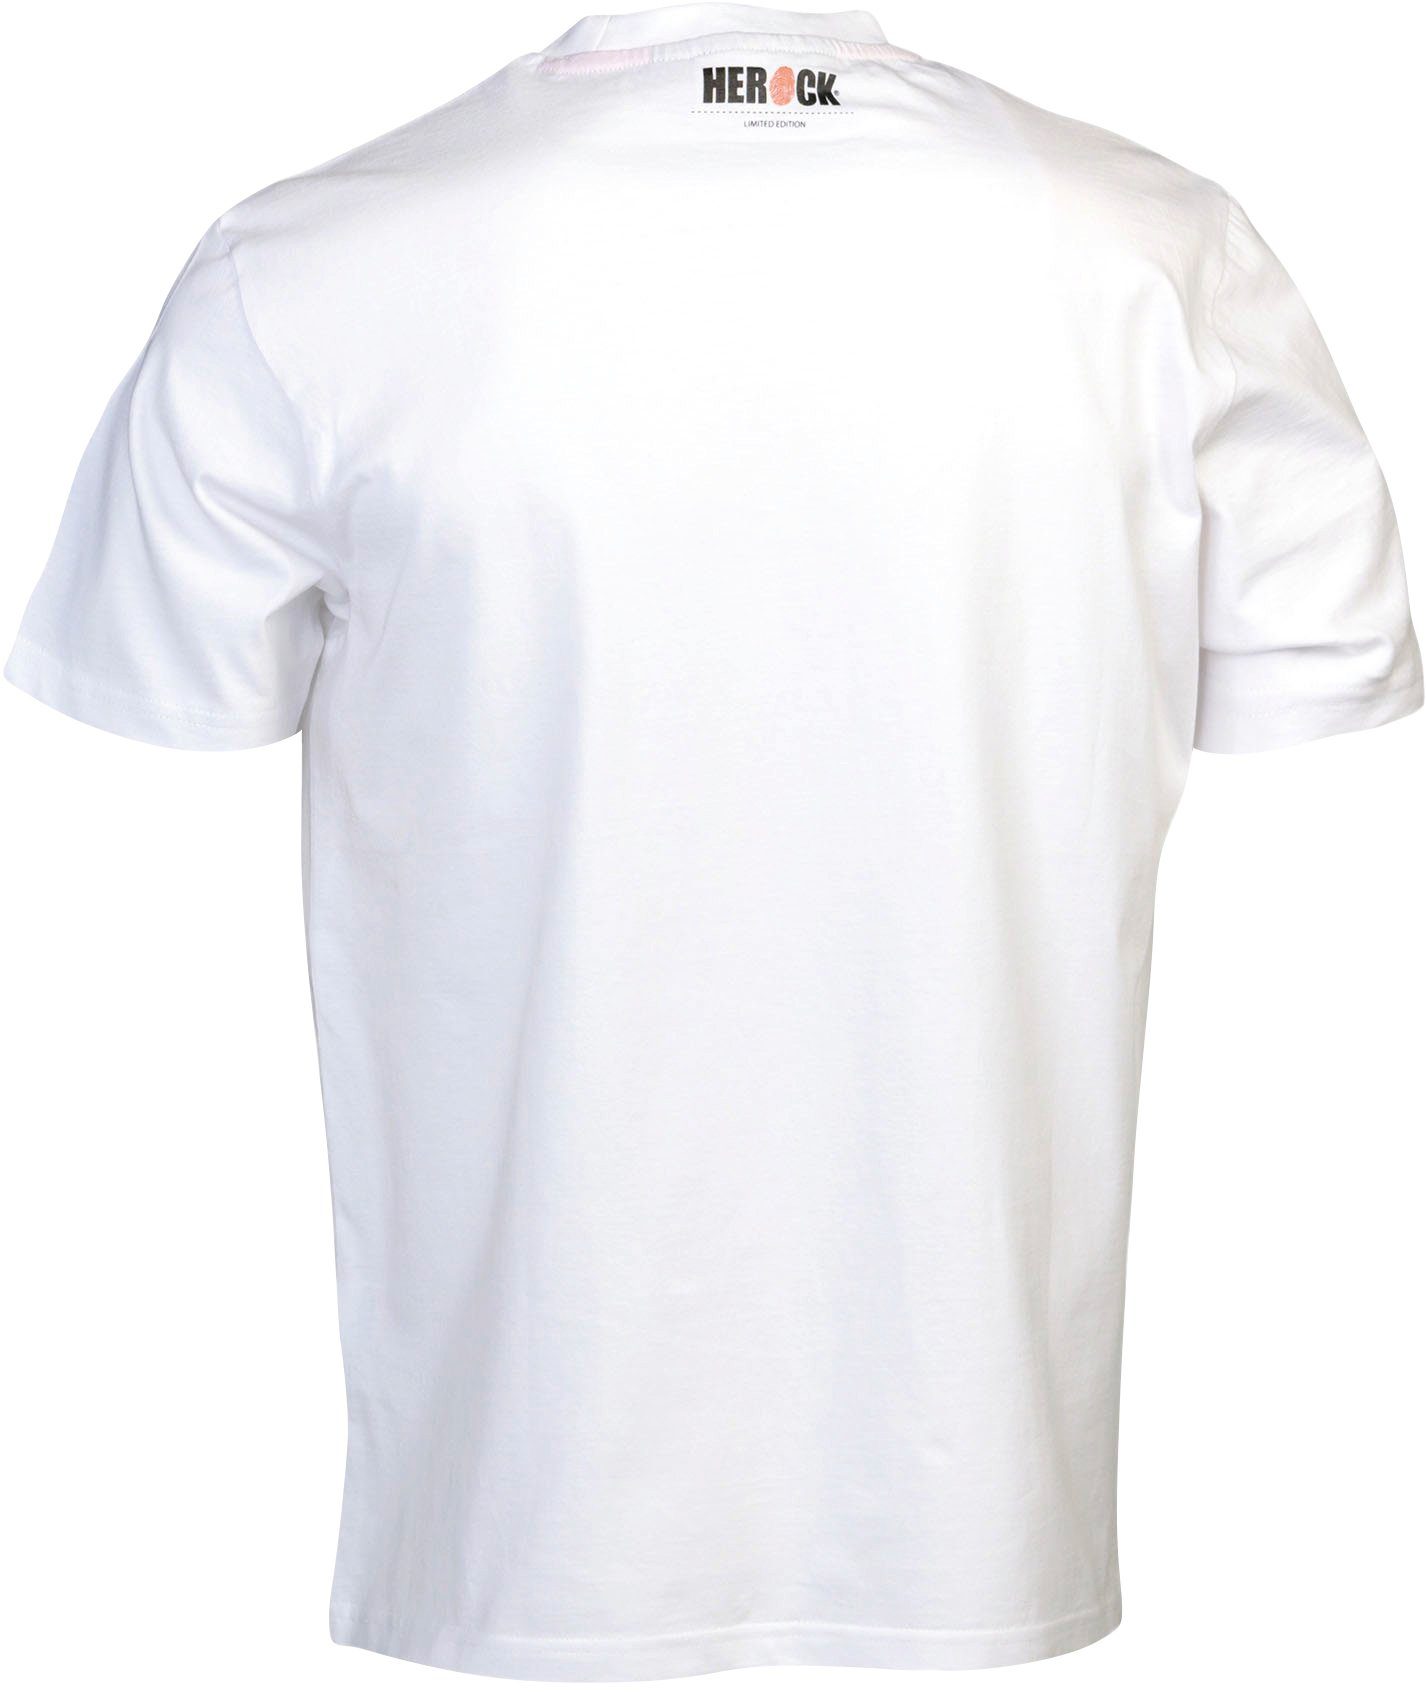 Herock T-Shirt Burst Rundhalsausschnitt, kurzen Ärmeln, Mit Herock®-Aufdruck